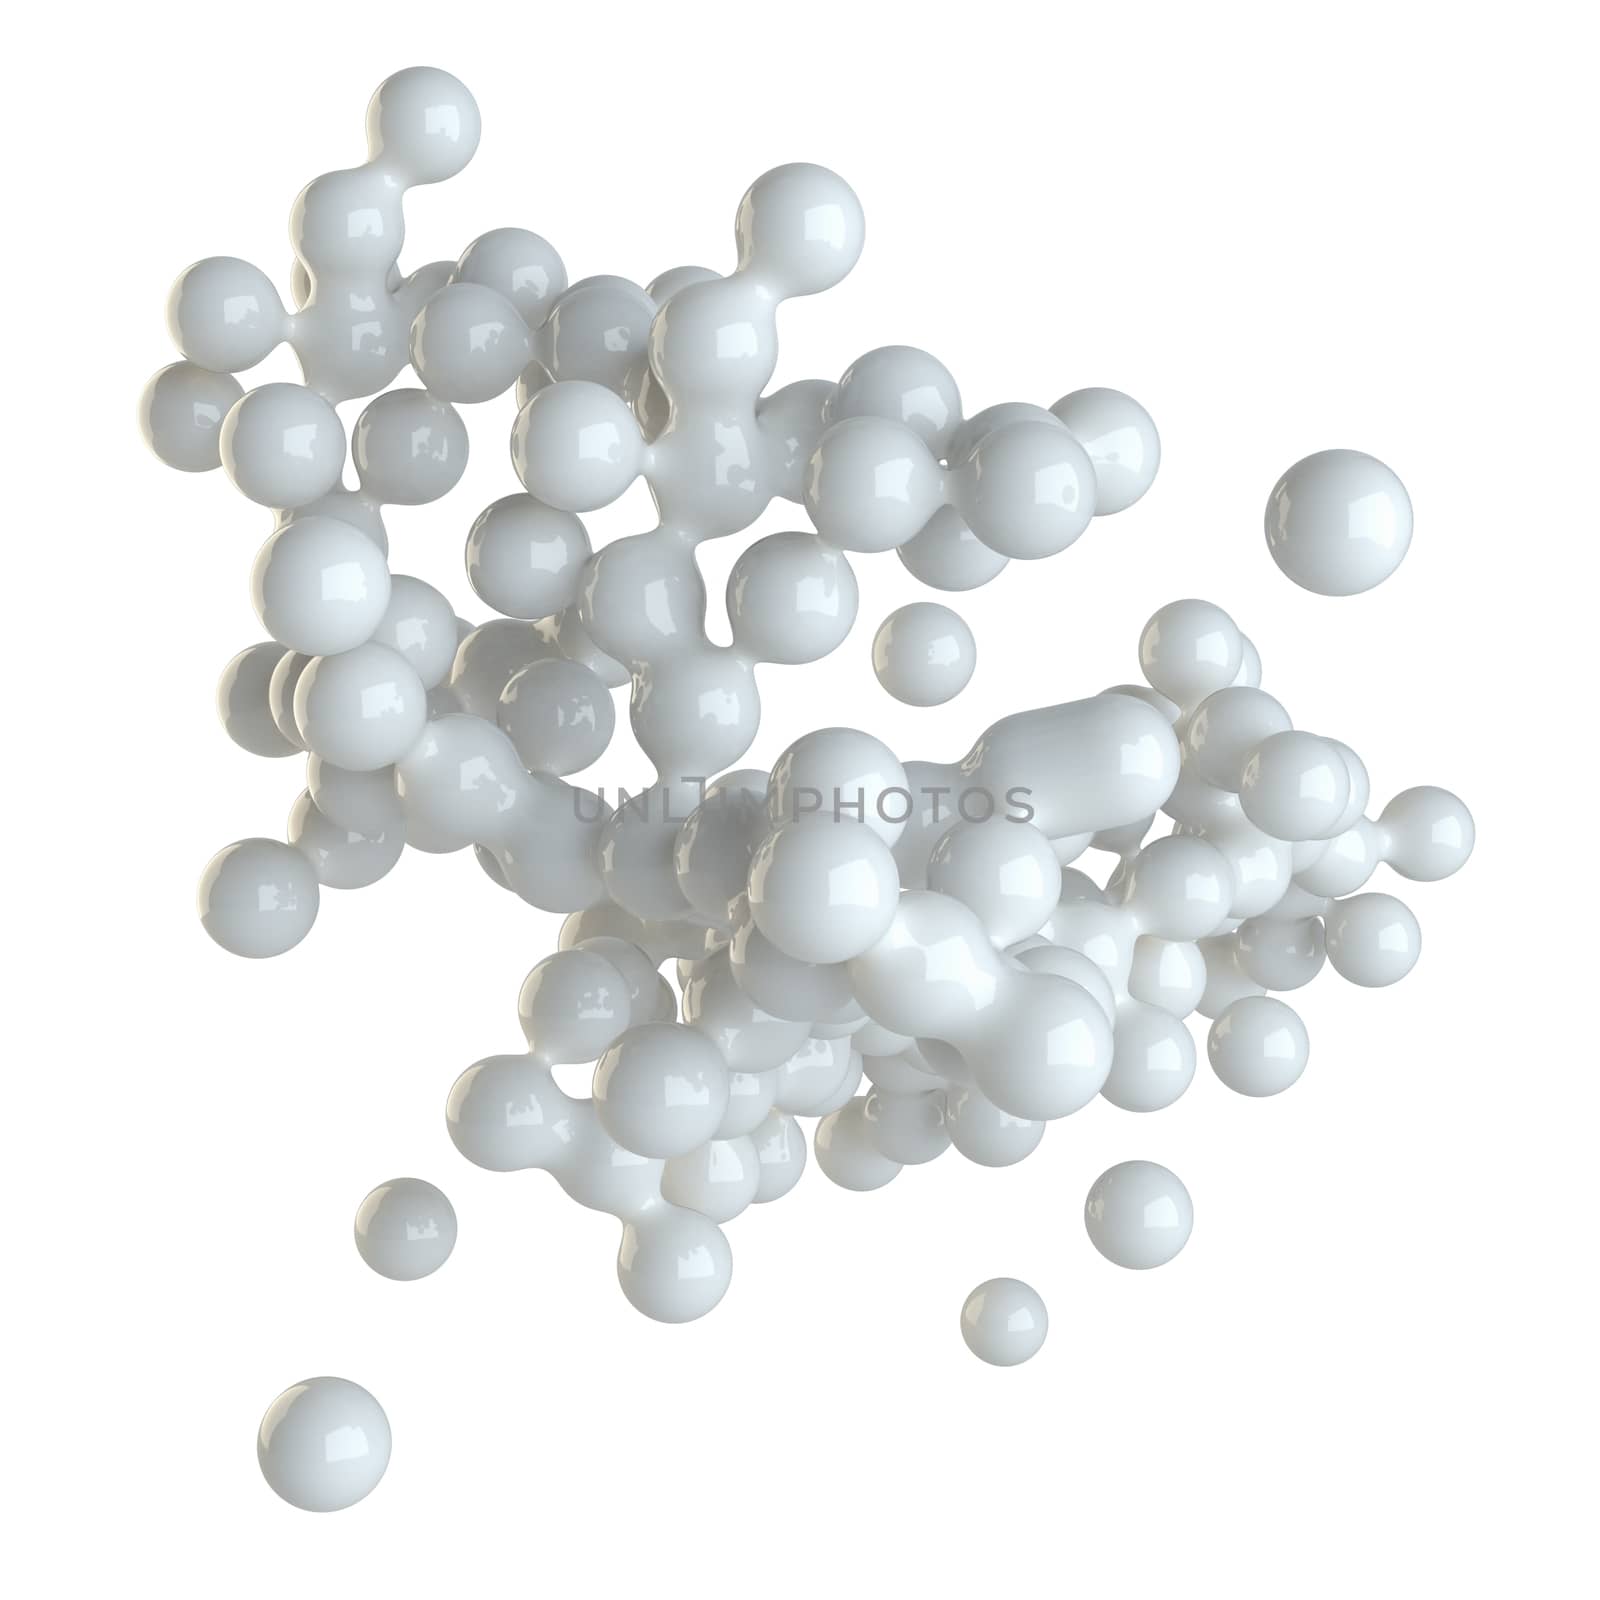 Minimalistic white background with balls by cherezoff